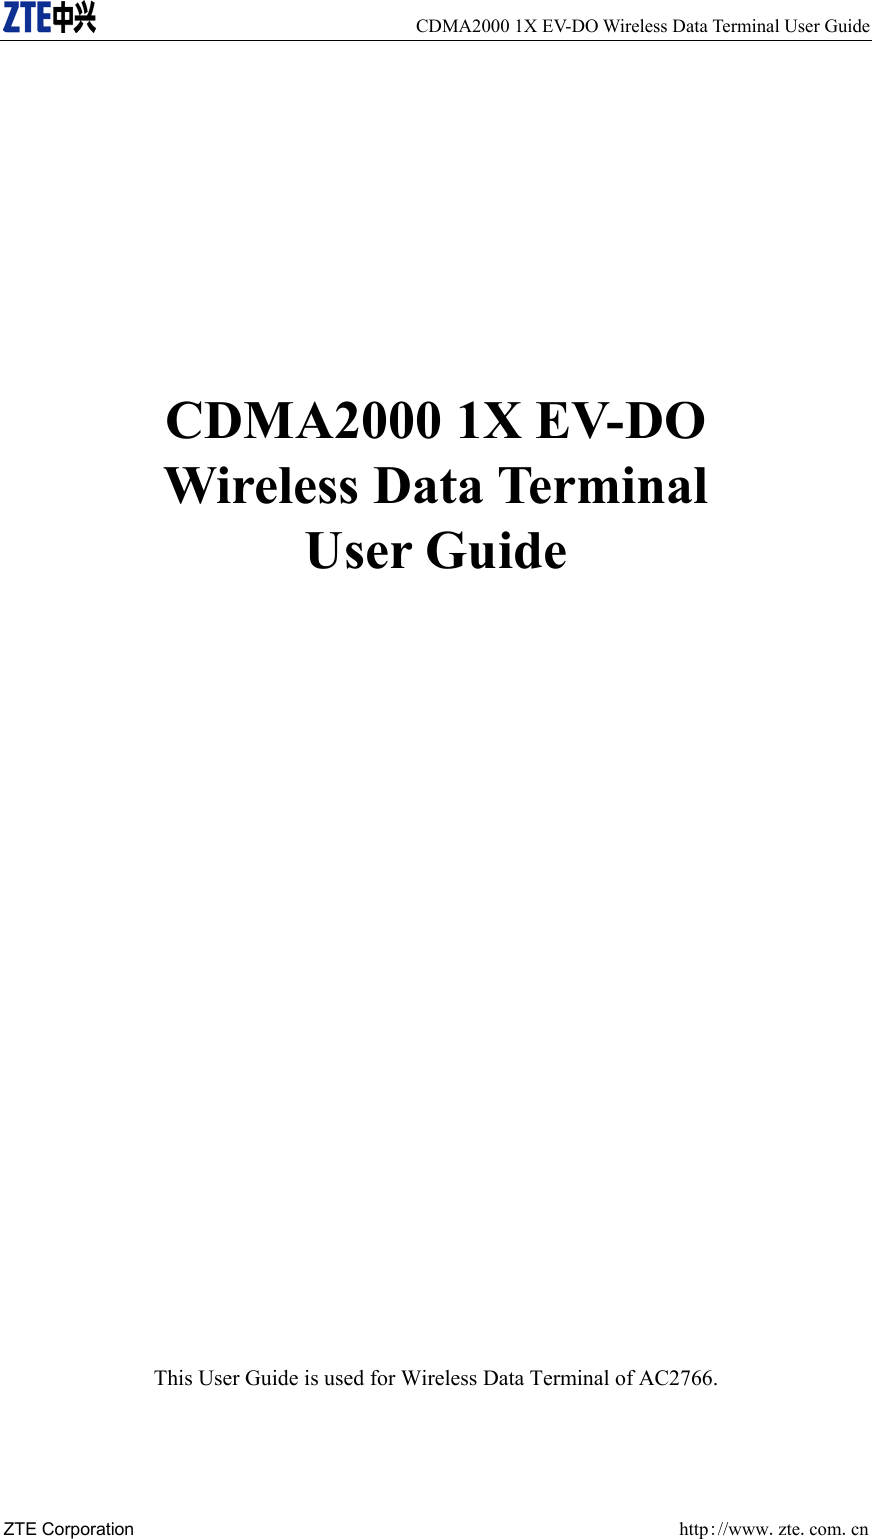   CDMA2000 1X EV-DO Wireless Data Terminal User Guide ZTE Corporation  http://www.zte.com.cn        CDMA2000 1X EV-DO Wireless Data Terminal User Guide                         This User Guide is used for Wireless Data Terminal of AC2766. 